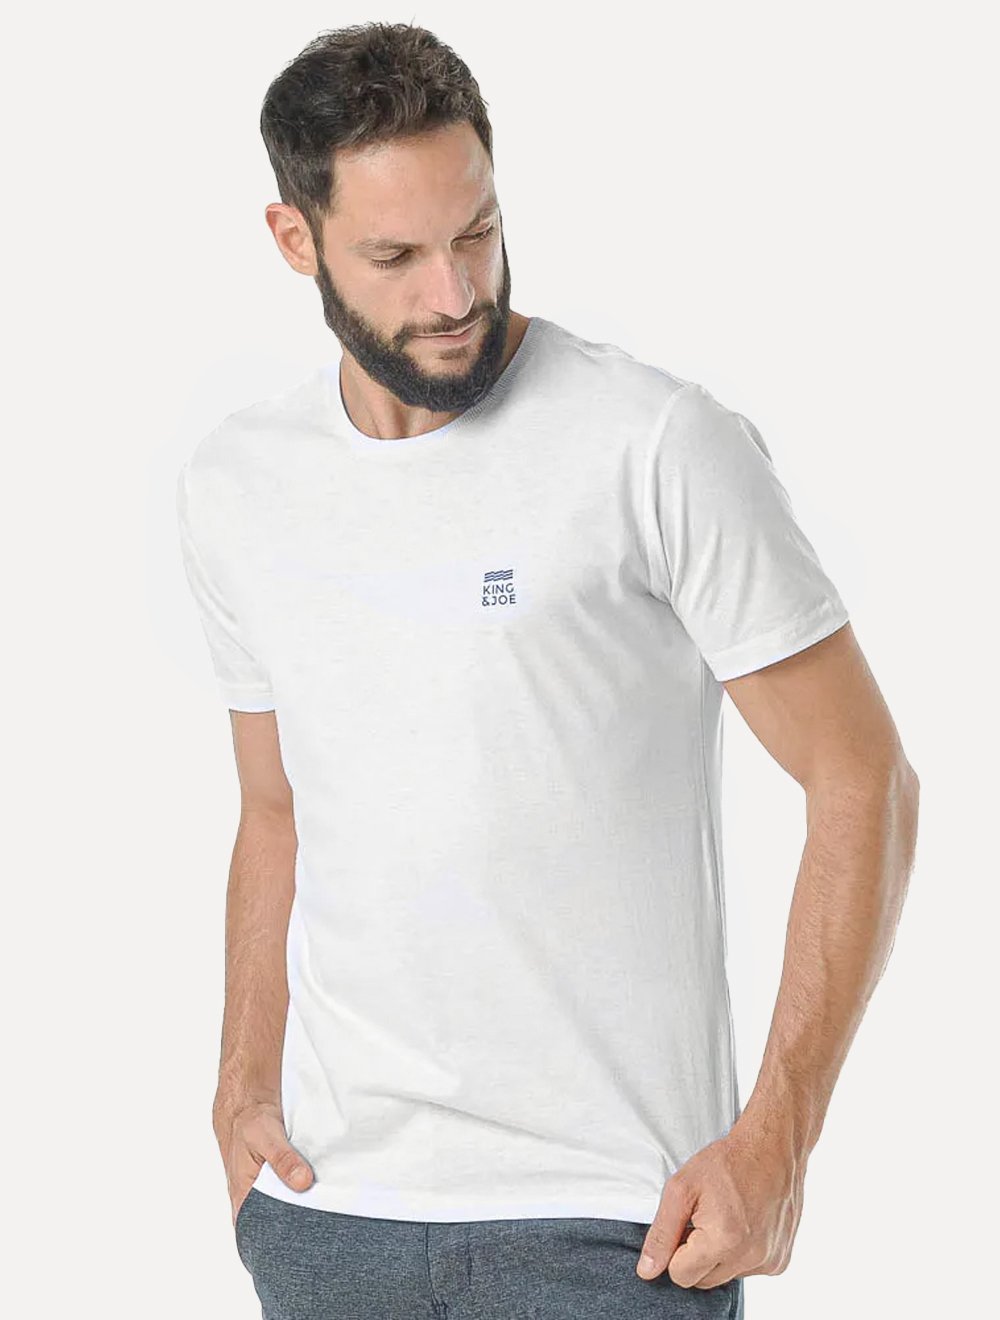 Camiseta King & Joe Masculina Slim Basic Blue Logo Branca